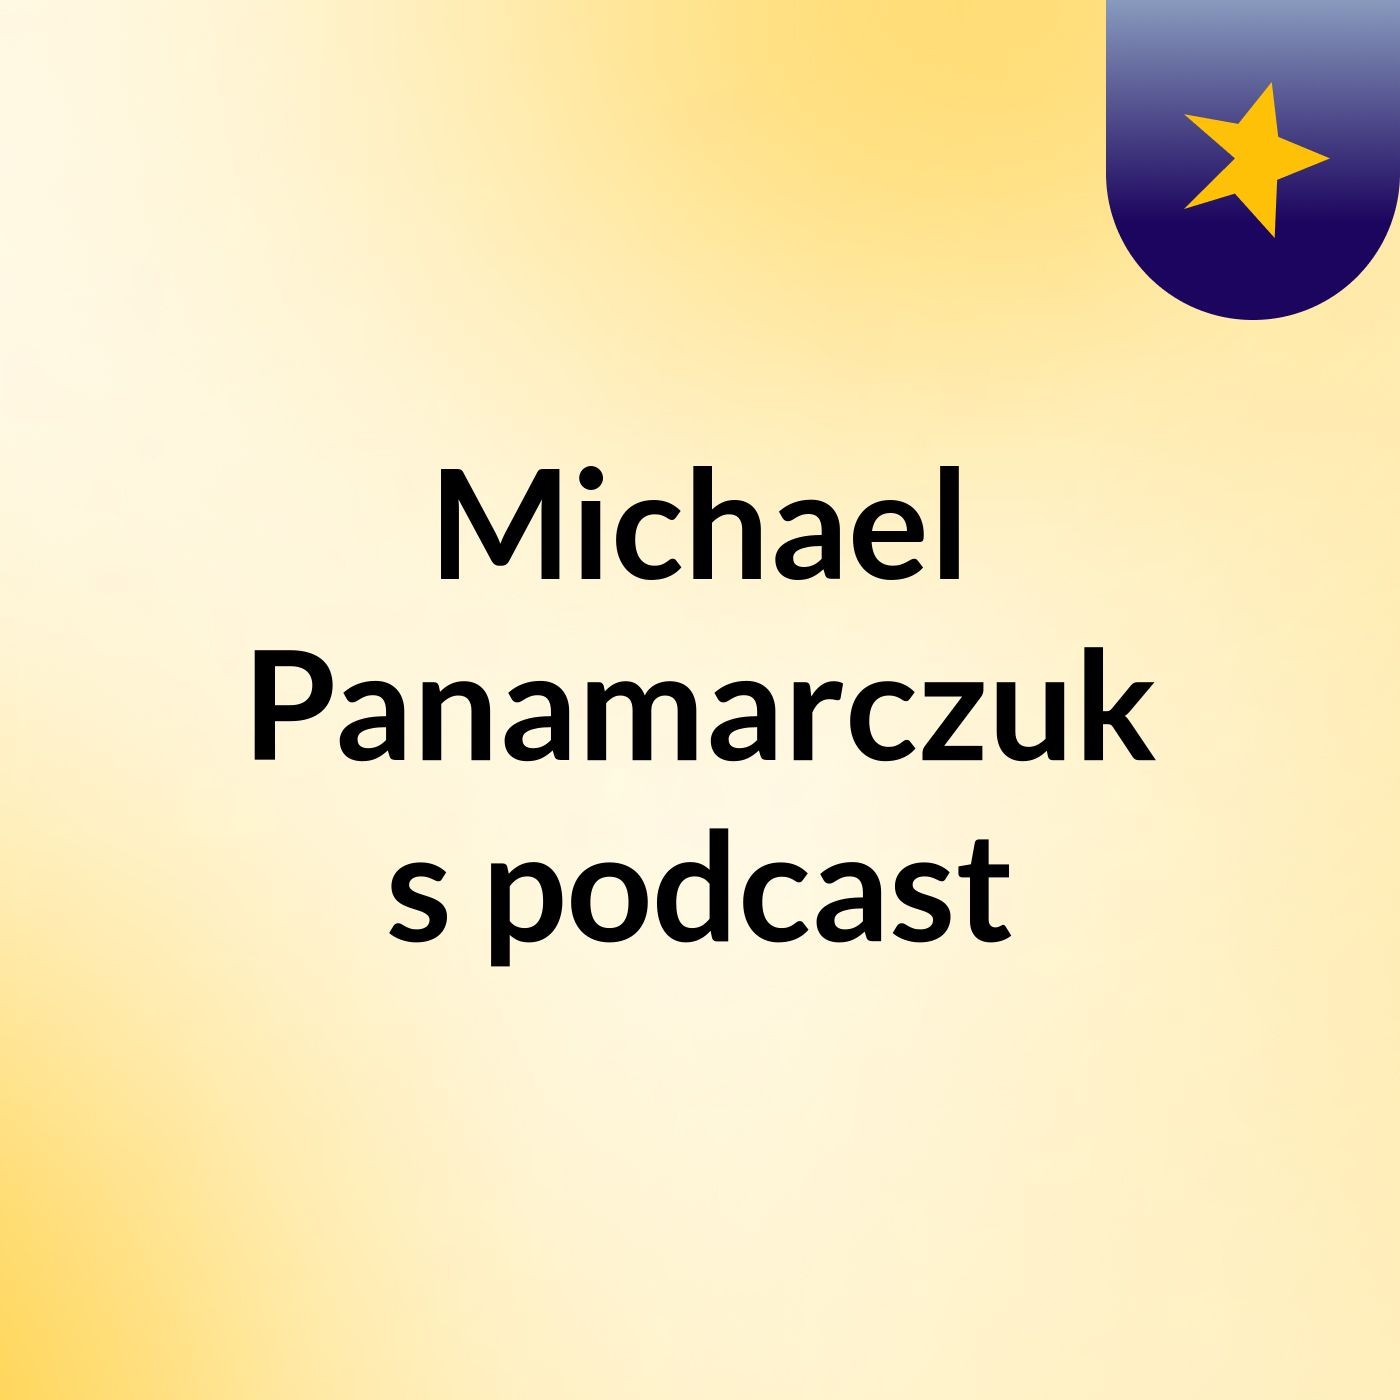 Episode 18 - Michael Panamarczuk's podcast